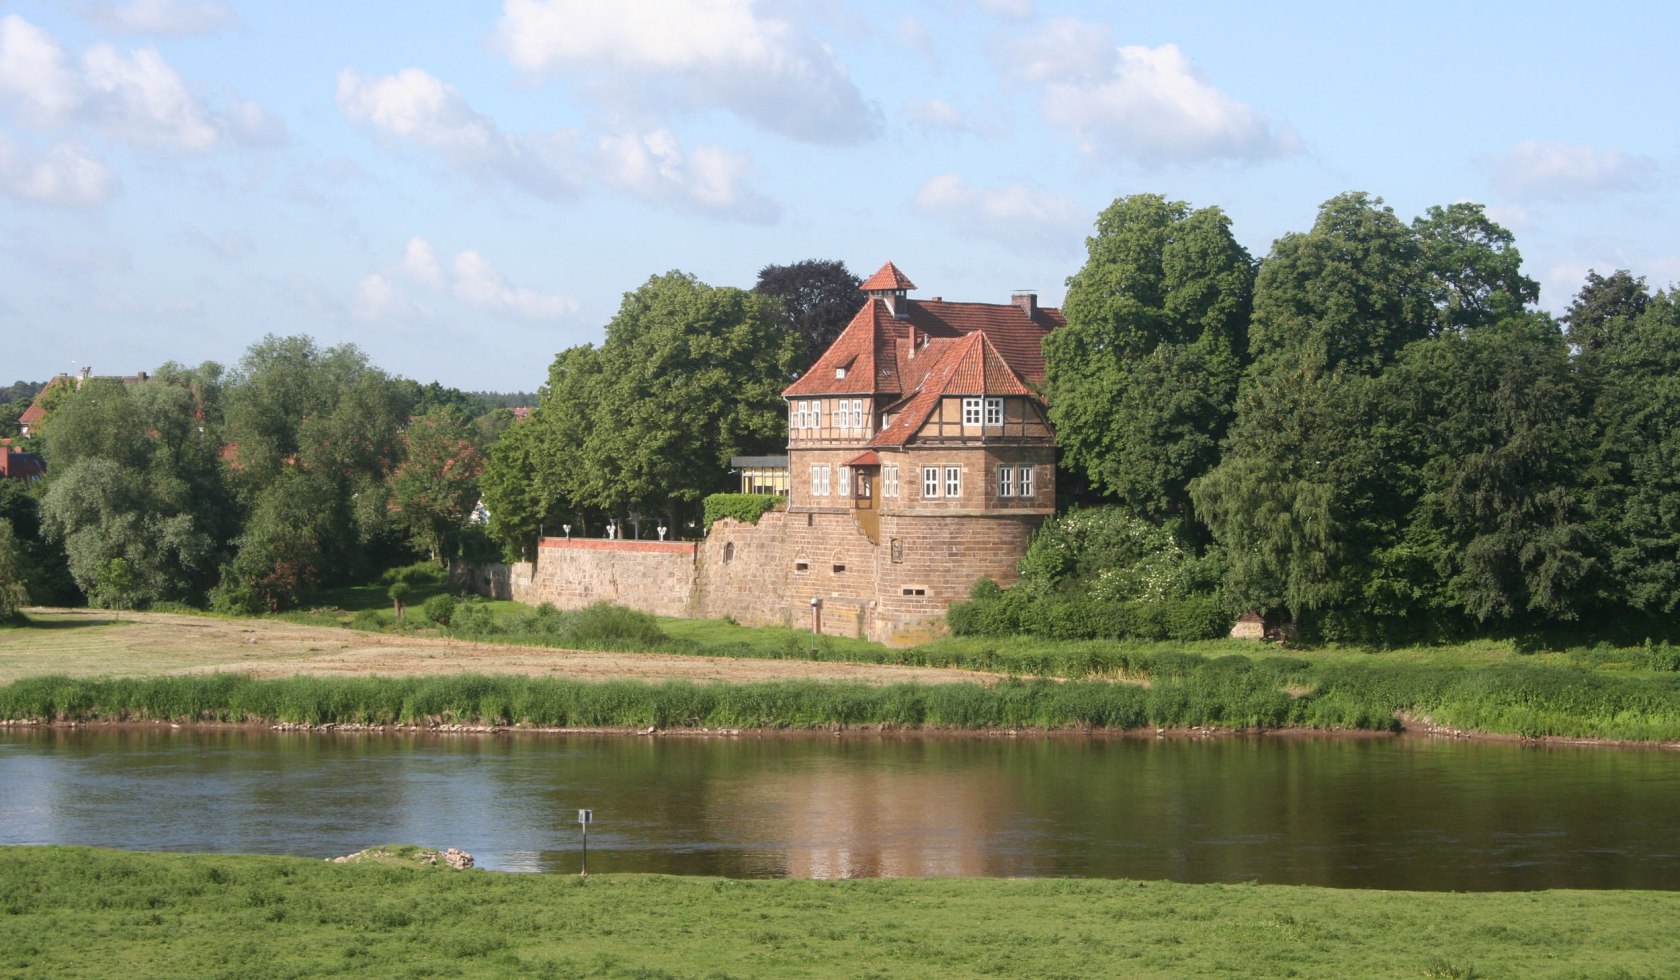 The Weserenaissance castle in Petershagen behind the river., © Mittelweser-Touristik GmbH